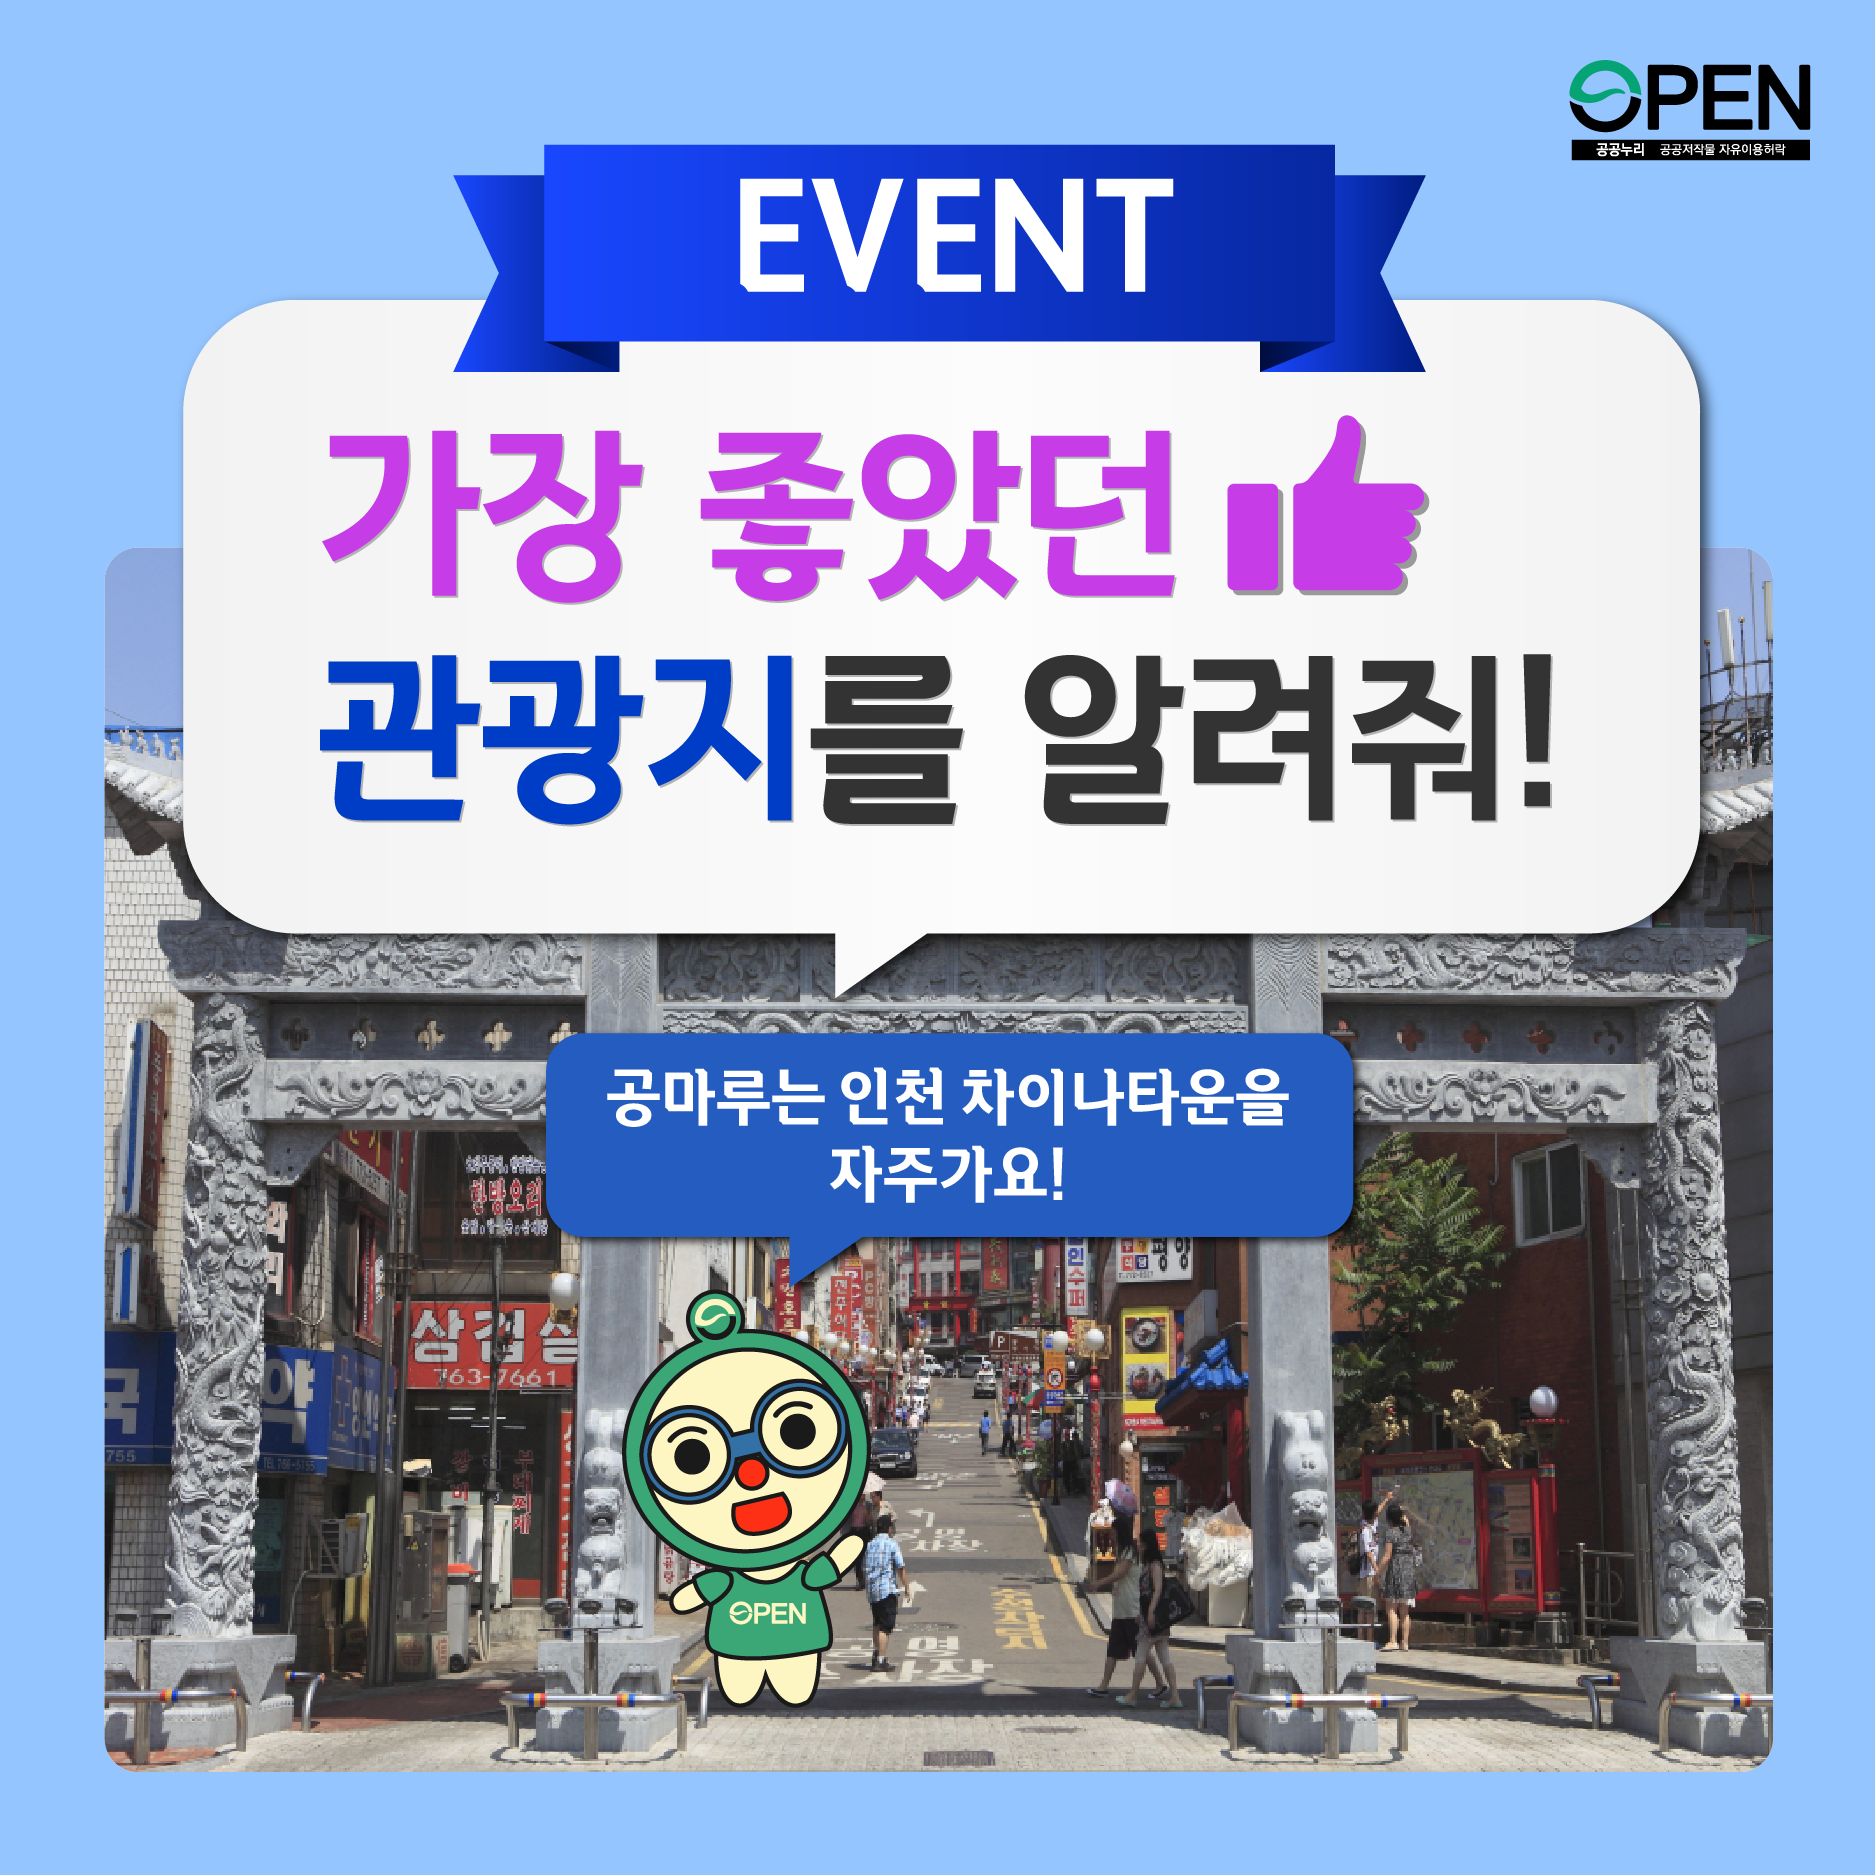 EVENT 가장좋았던 관광지를 알려줘! 공마루는 인천 차이나타운을 자주가요!